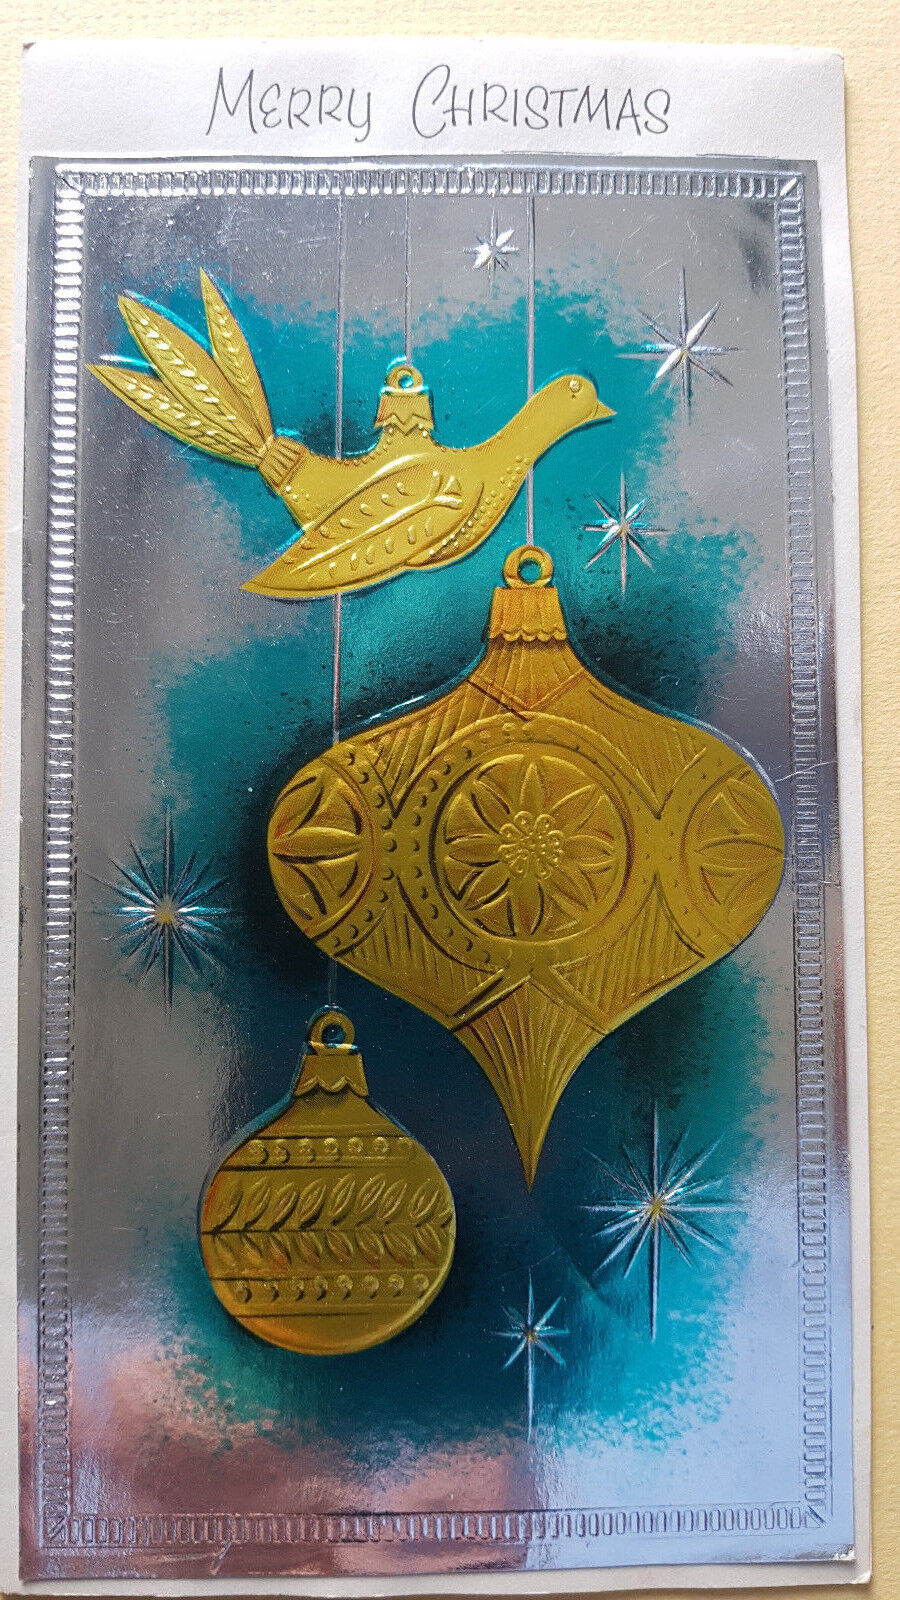 VINTAGE CHRISTMAS CARD AQUA SILVER GOLD FOIL ORNAMENTS EMBOSSED STAR BURST RETRO